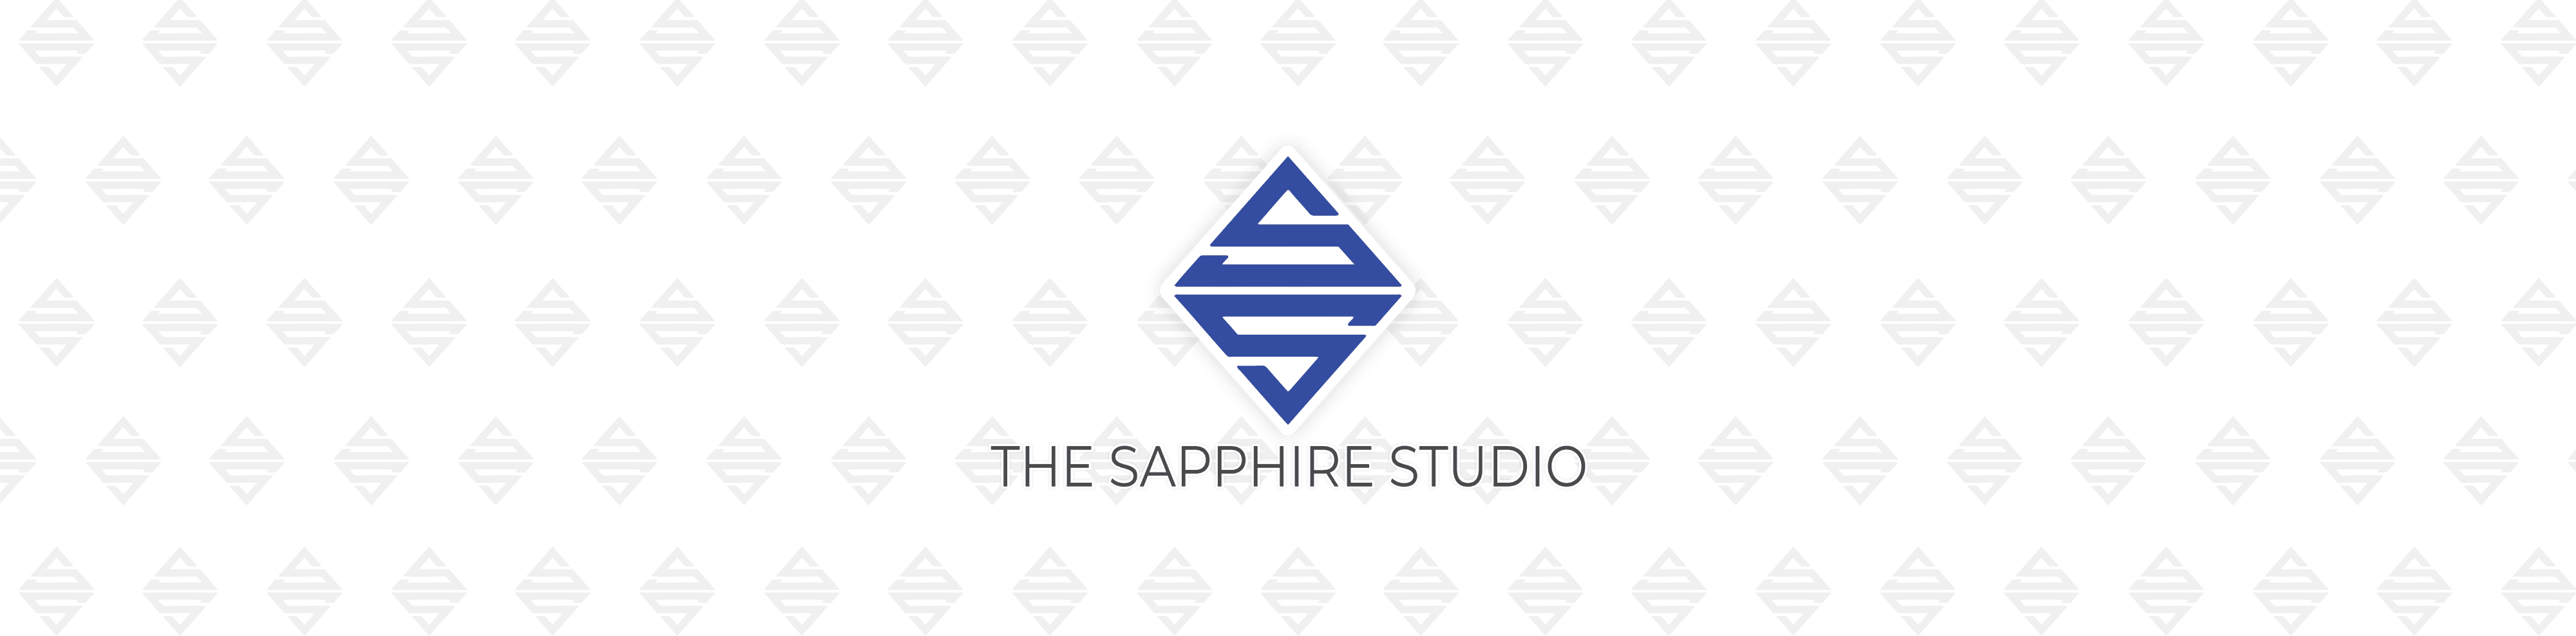 thesapphirestudio banner